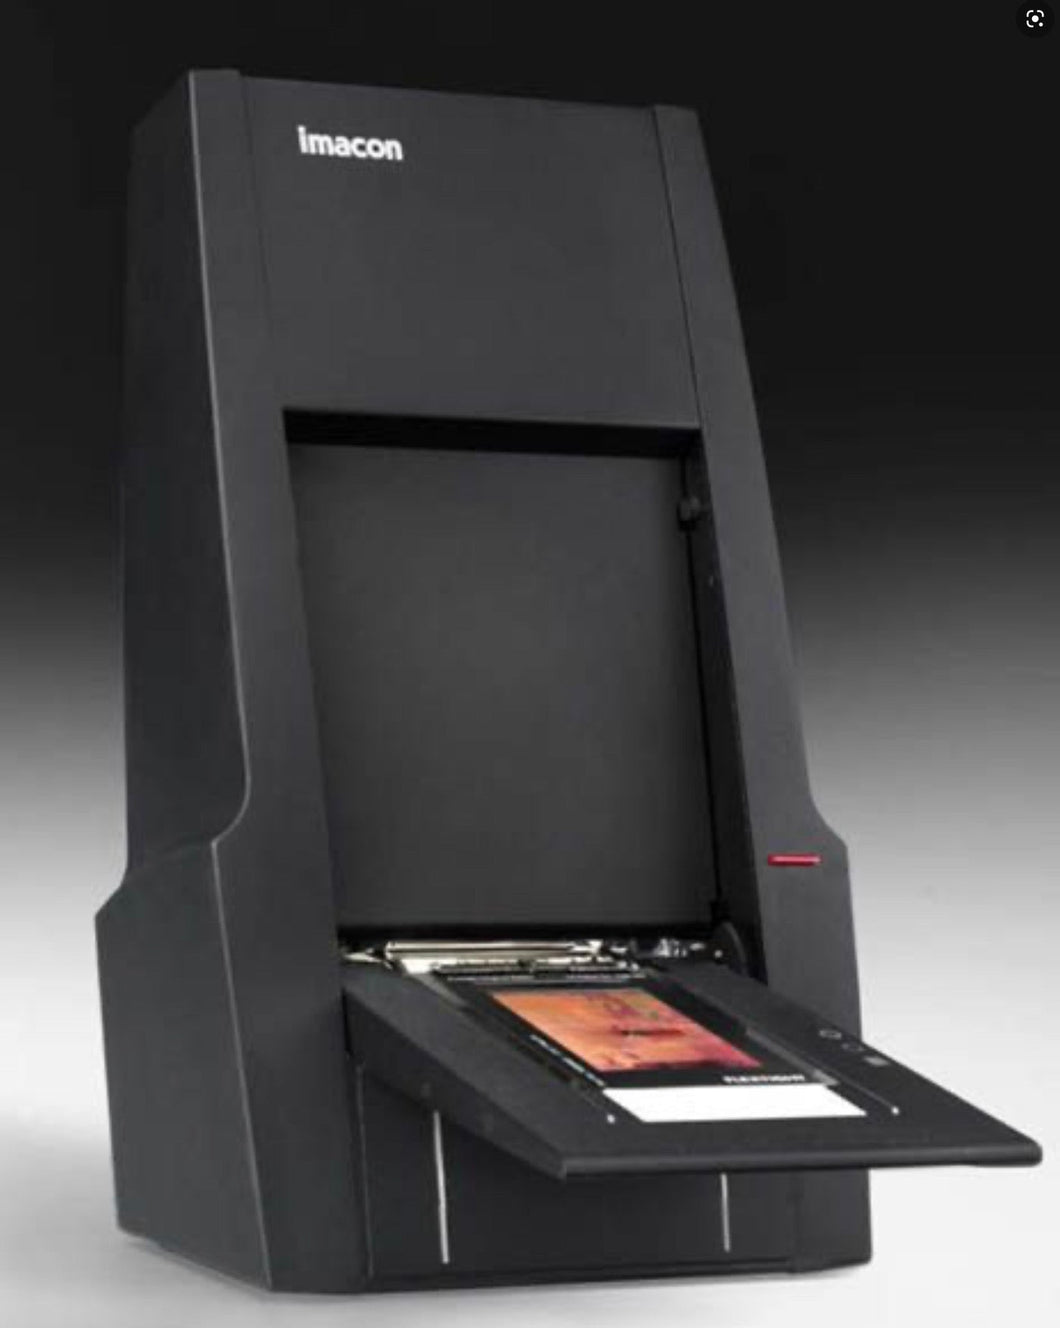 Hasselblad Imacon Single frame Scan 80 MB